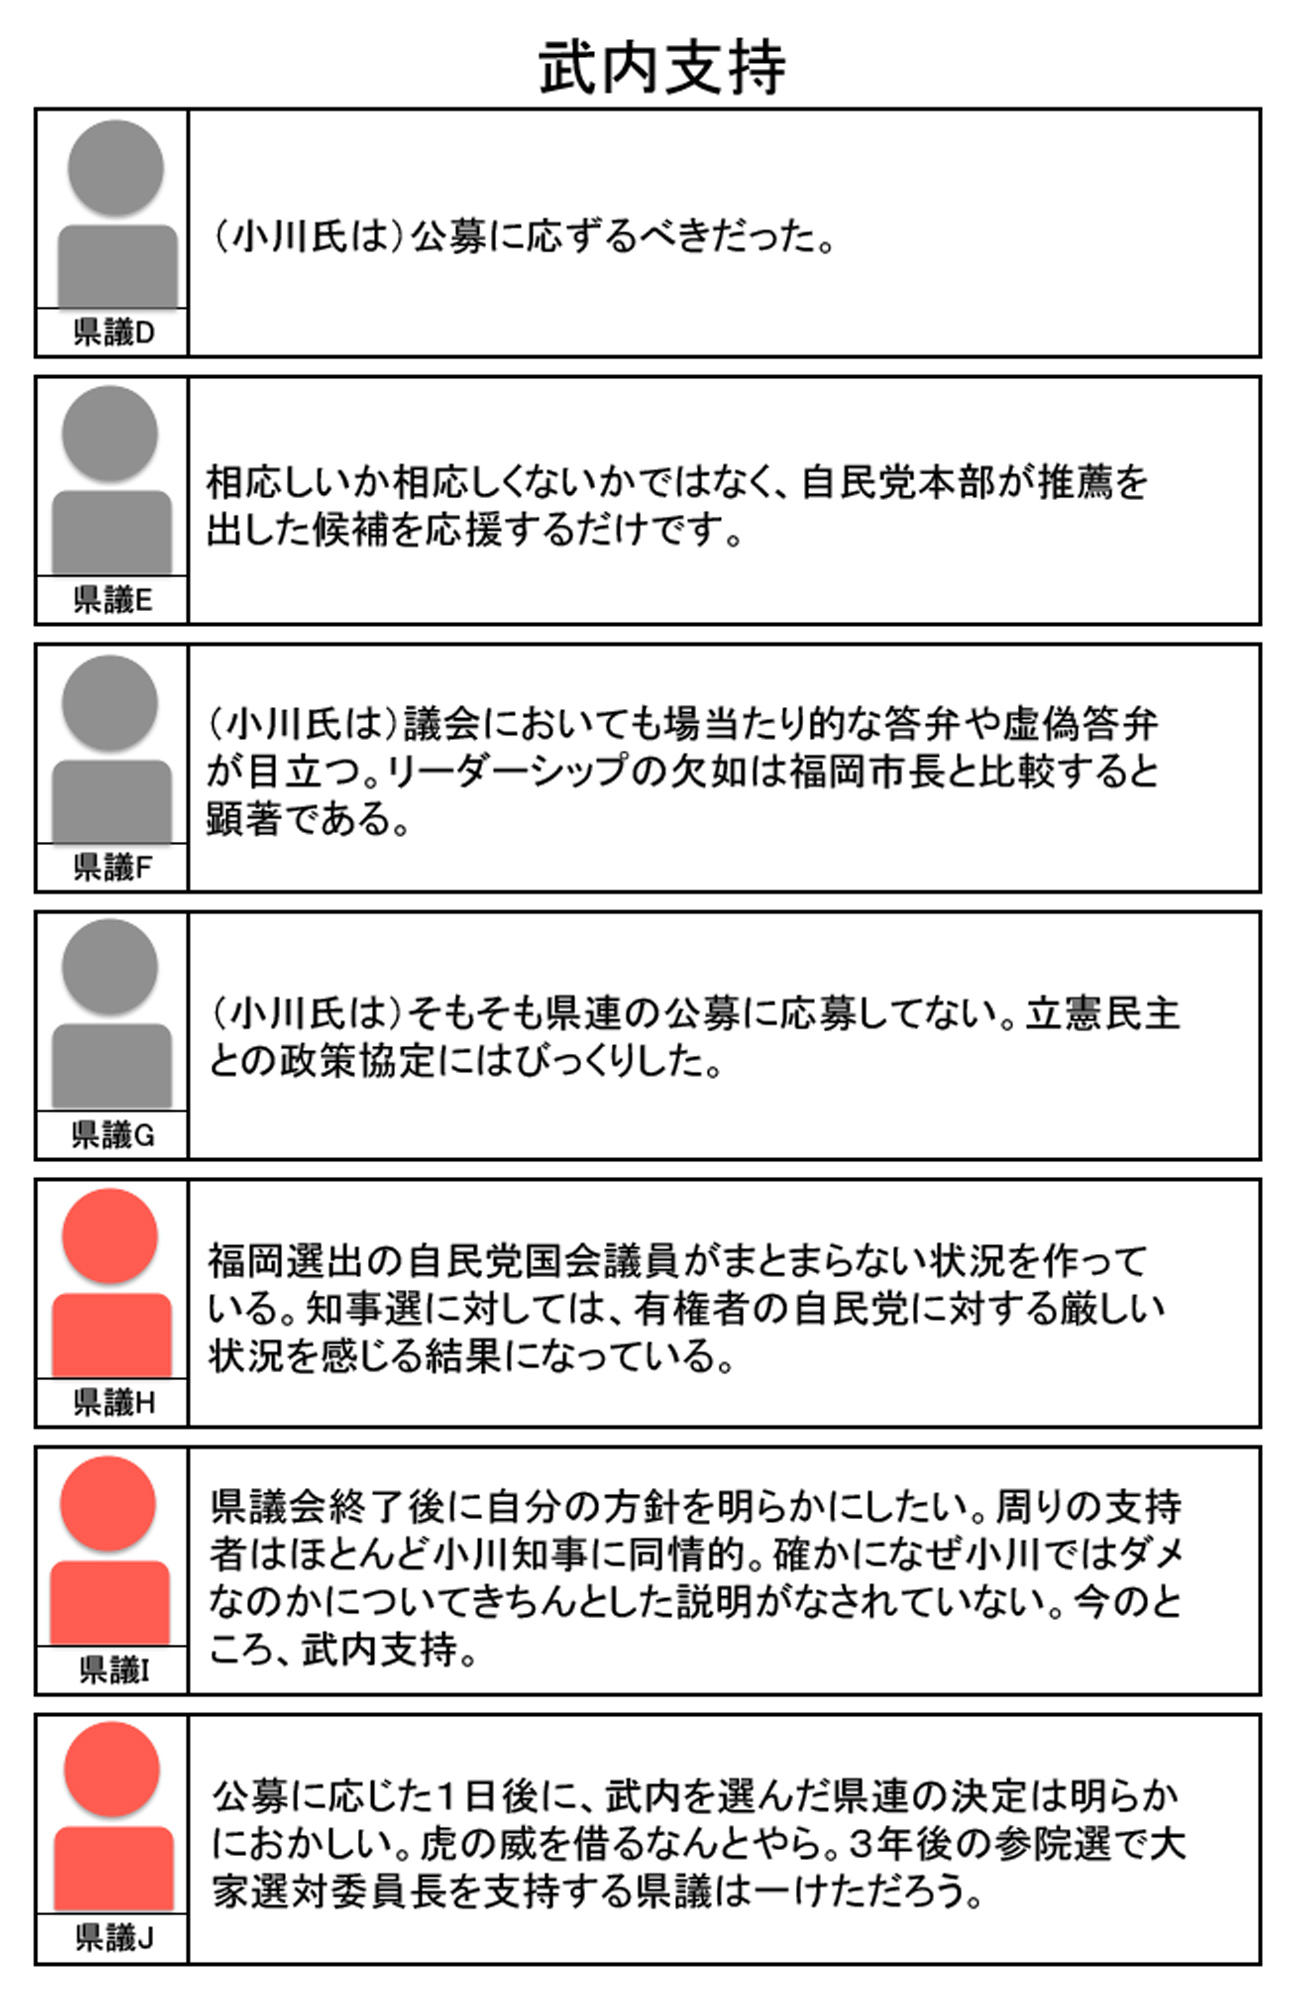 http://hunter-investigate.jp/news/takeuti5.jpg